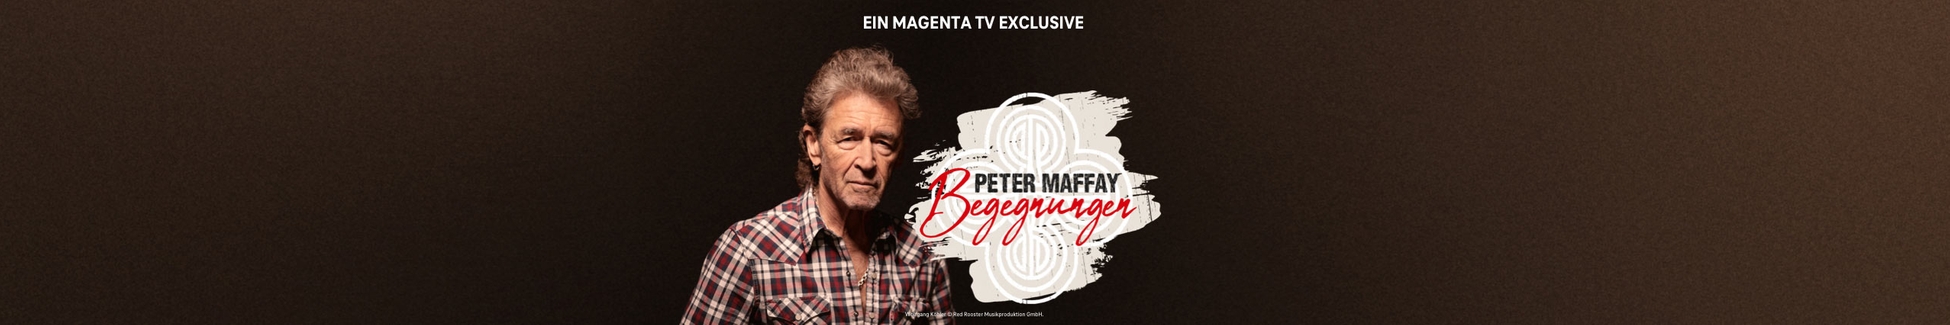 MagentaTV: Peter Maffay - Begegnungen